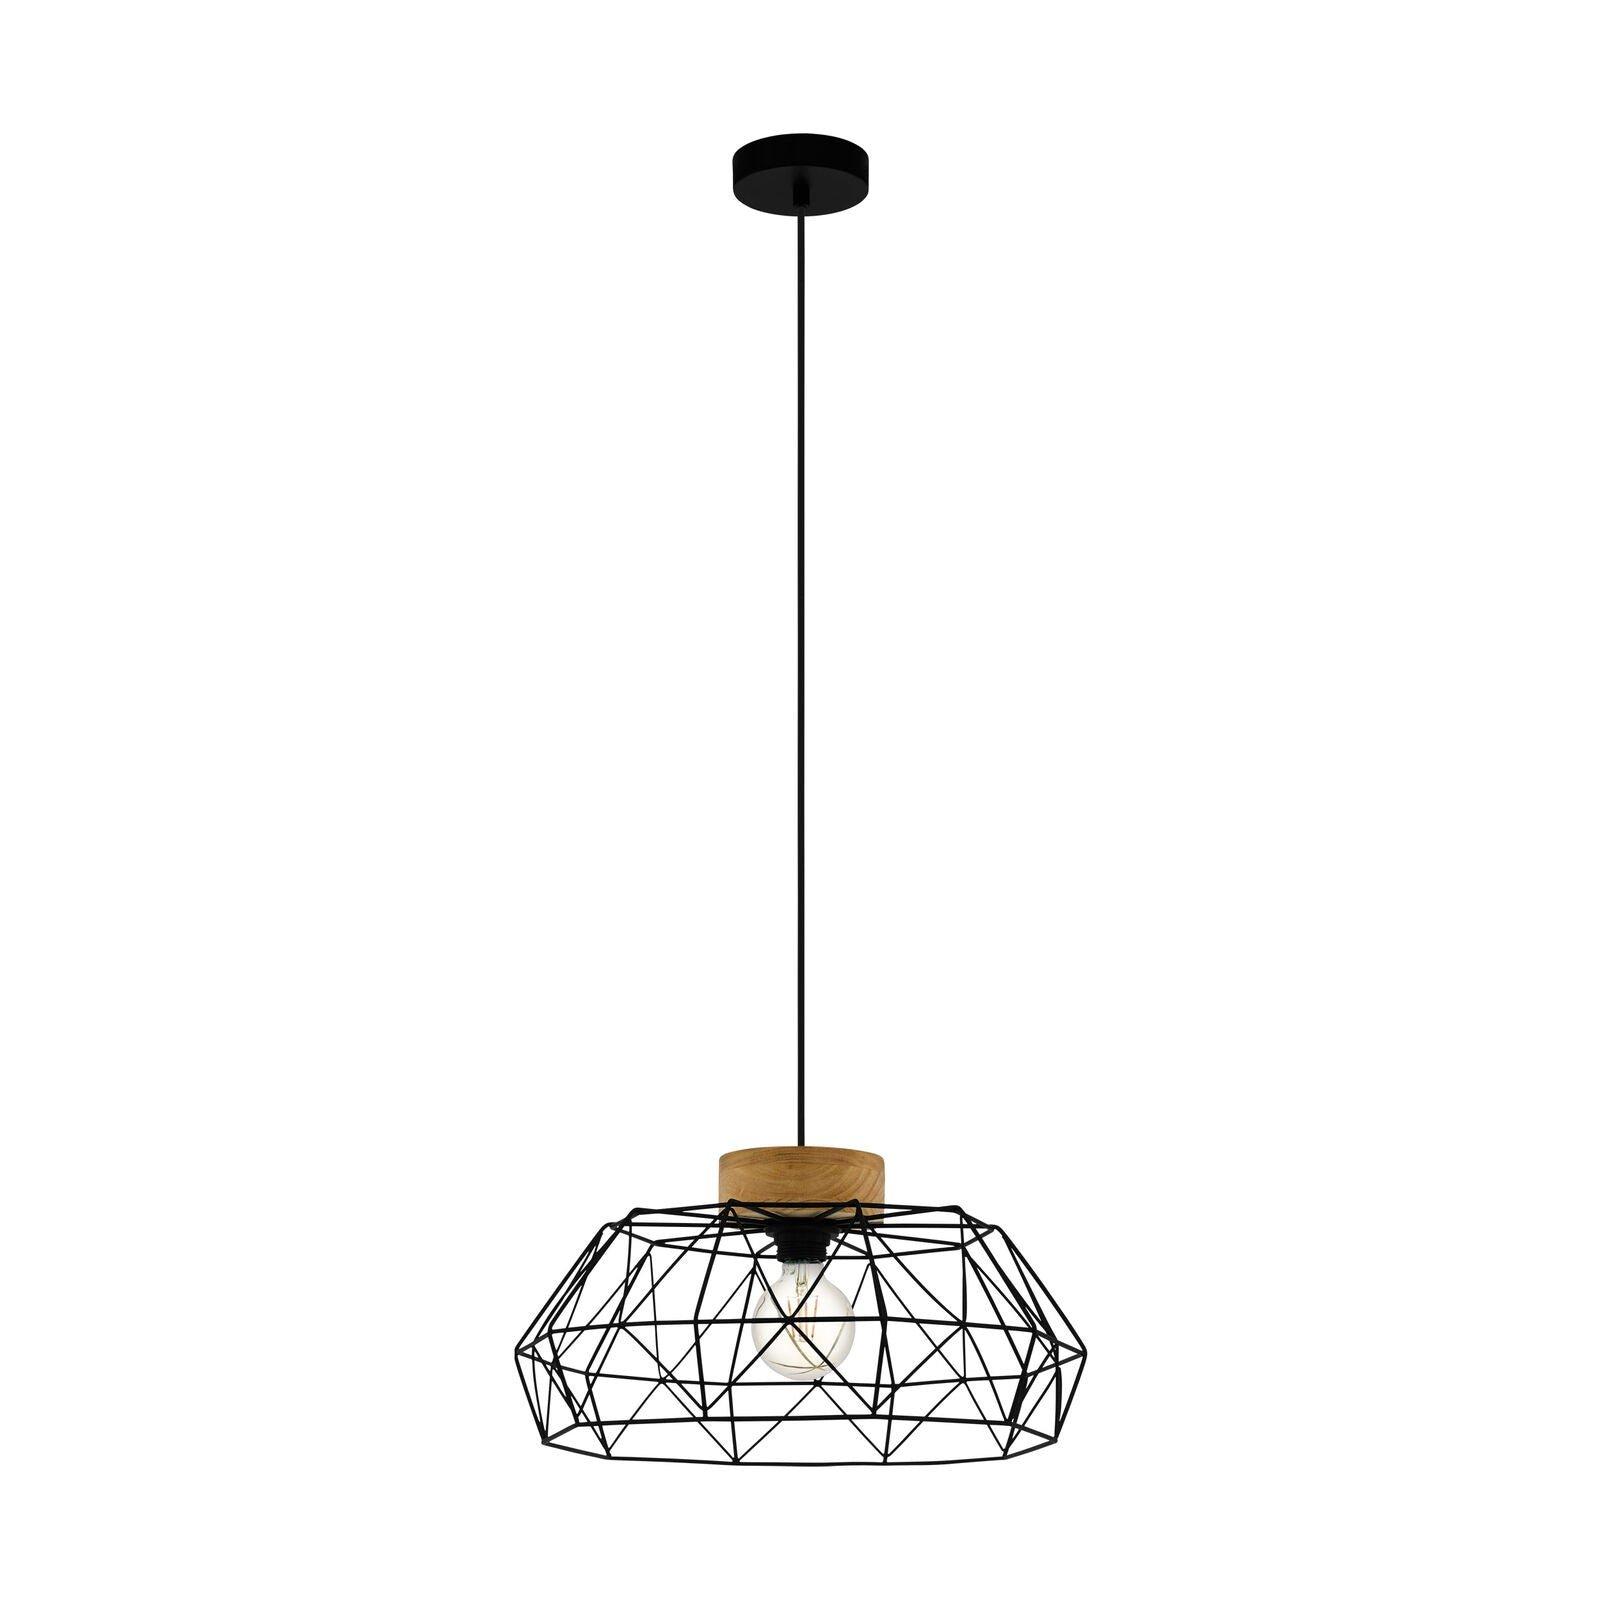 Hanging Ceiling Pendant Light Black Geometric Cage & Wood 1x E27 Bulb Feature